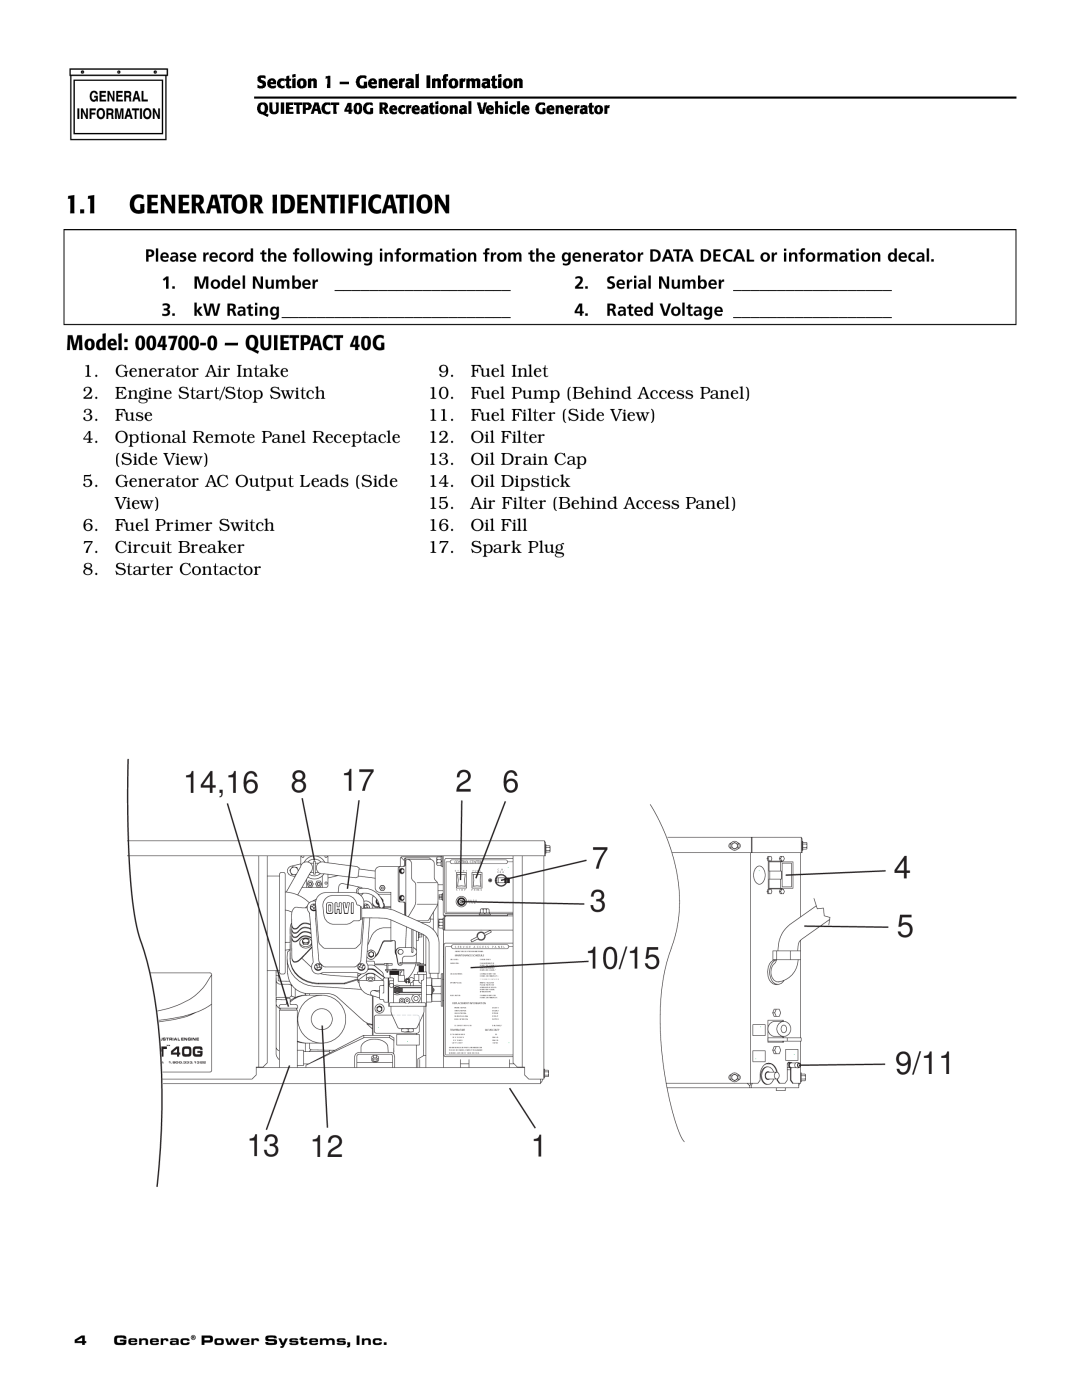 Generac Generator Identification, Model 004700-0 - QUIETPACT 40G, Model Number, kW Rating, 9/11, 14,16 8, 10/15 